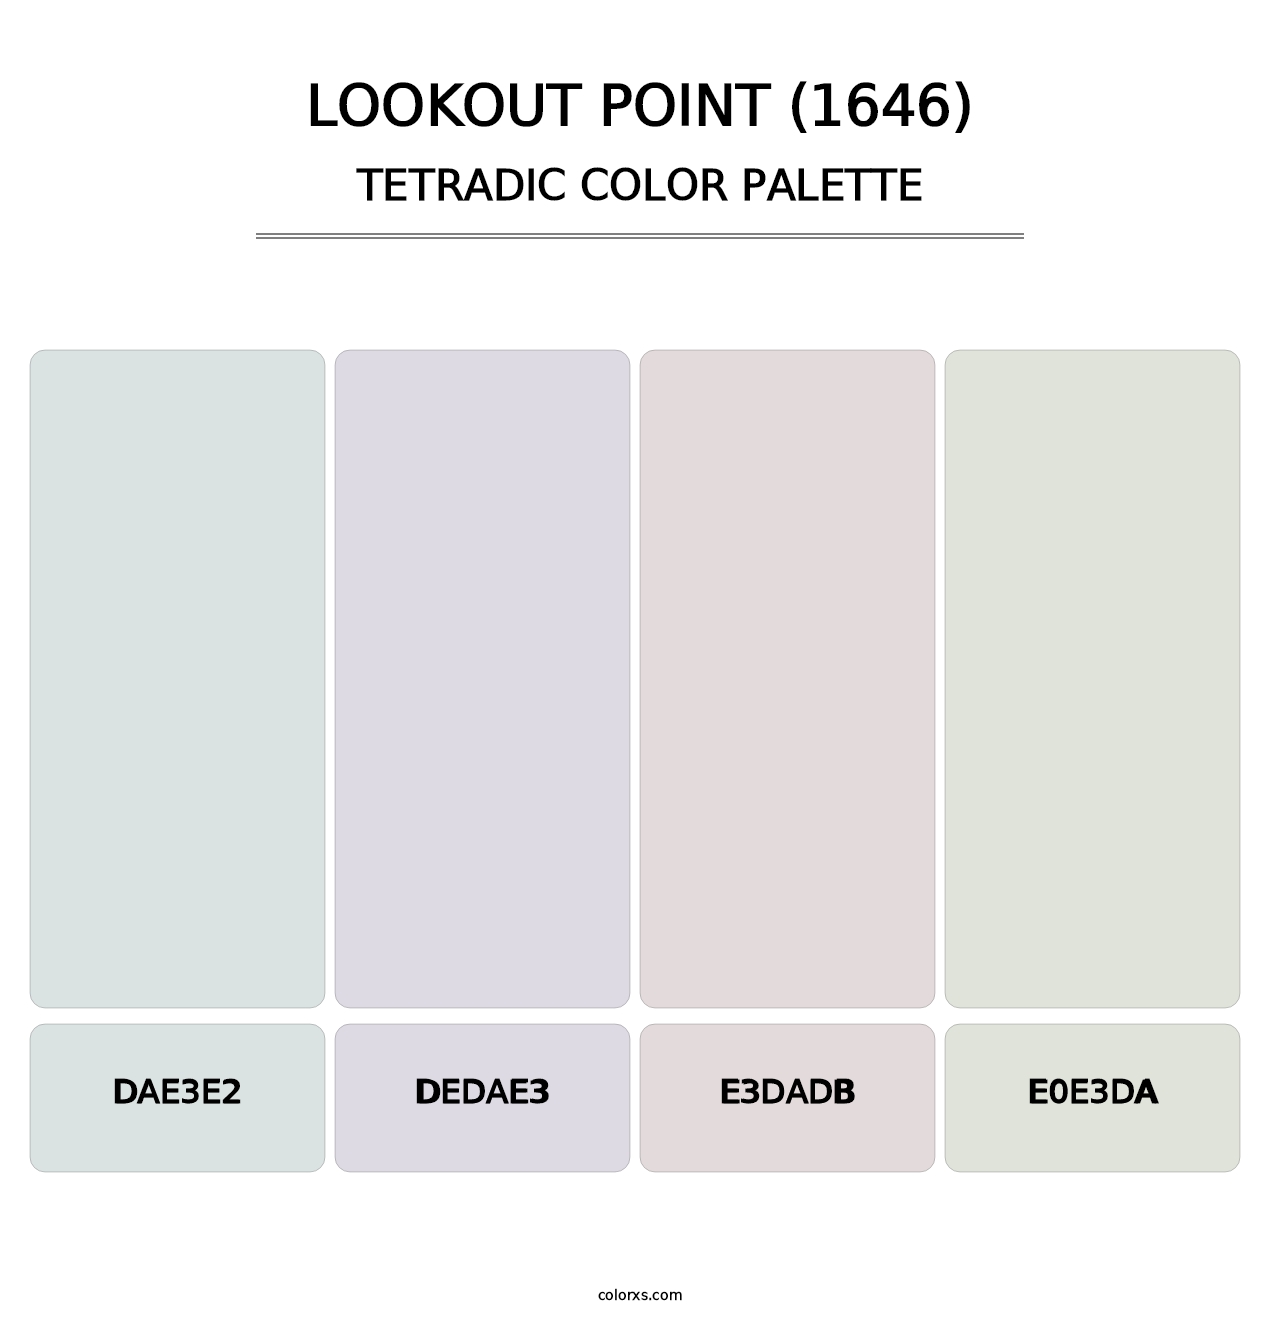 Lookout Point (1646) - Tetradic Color Palette